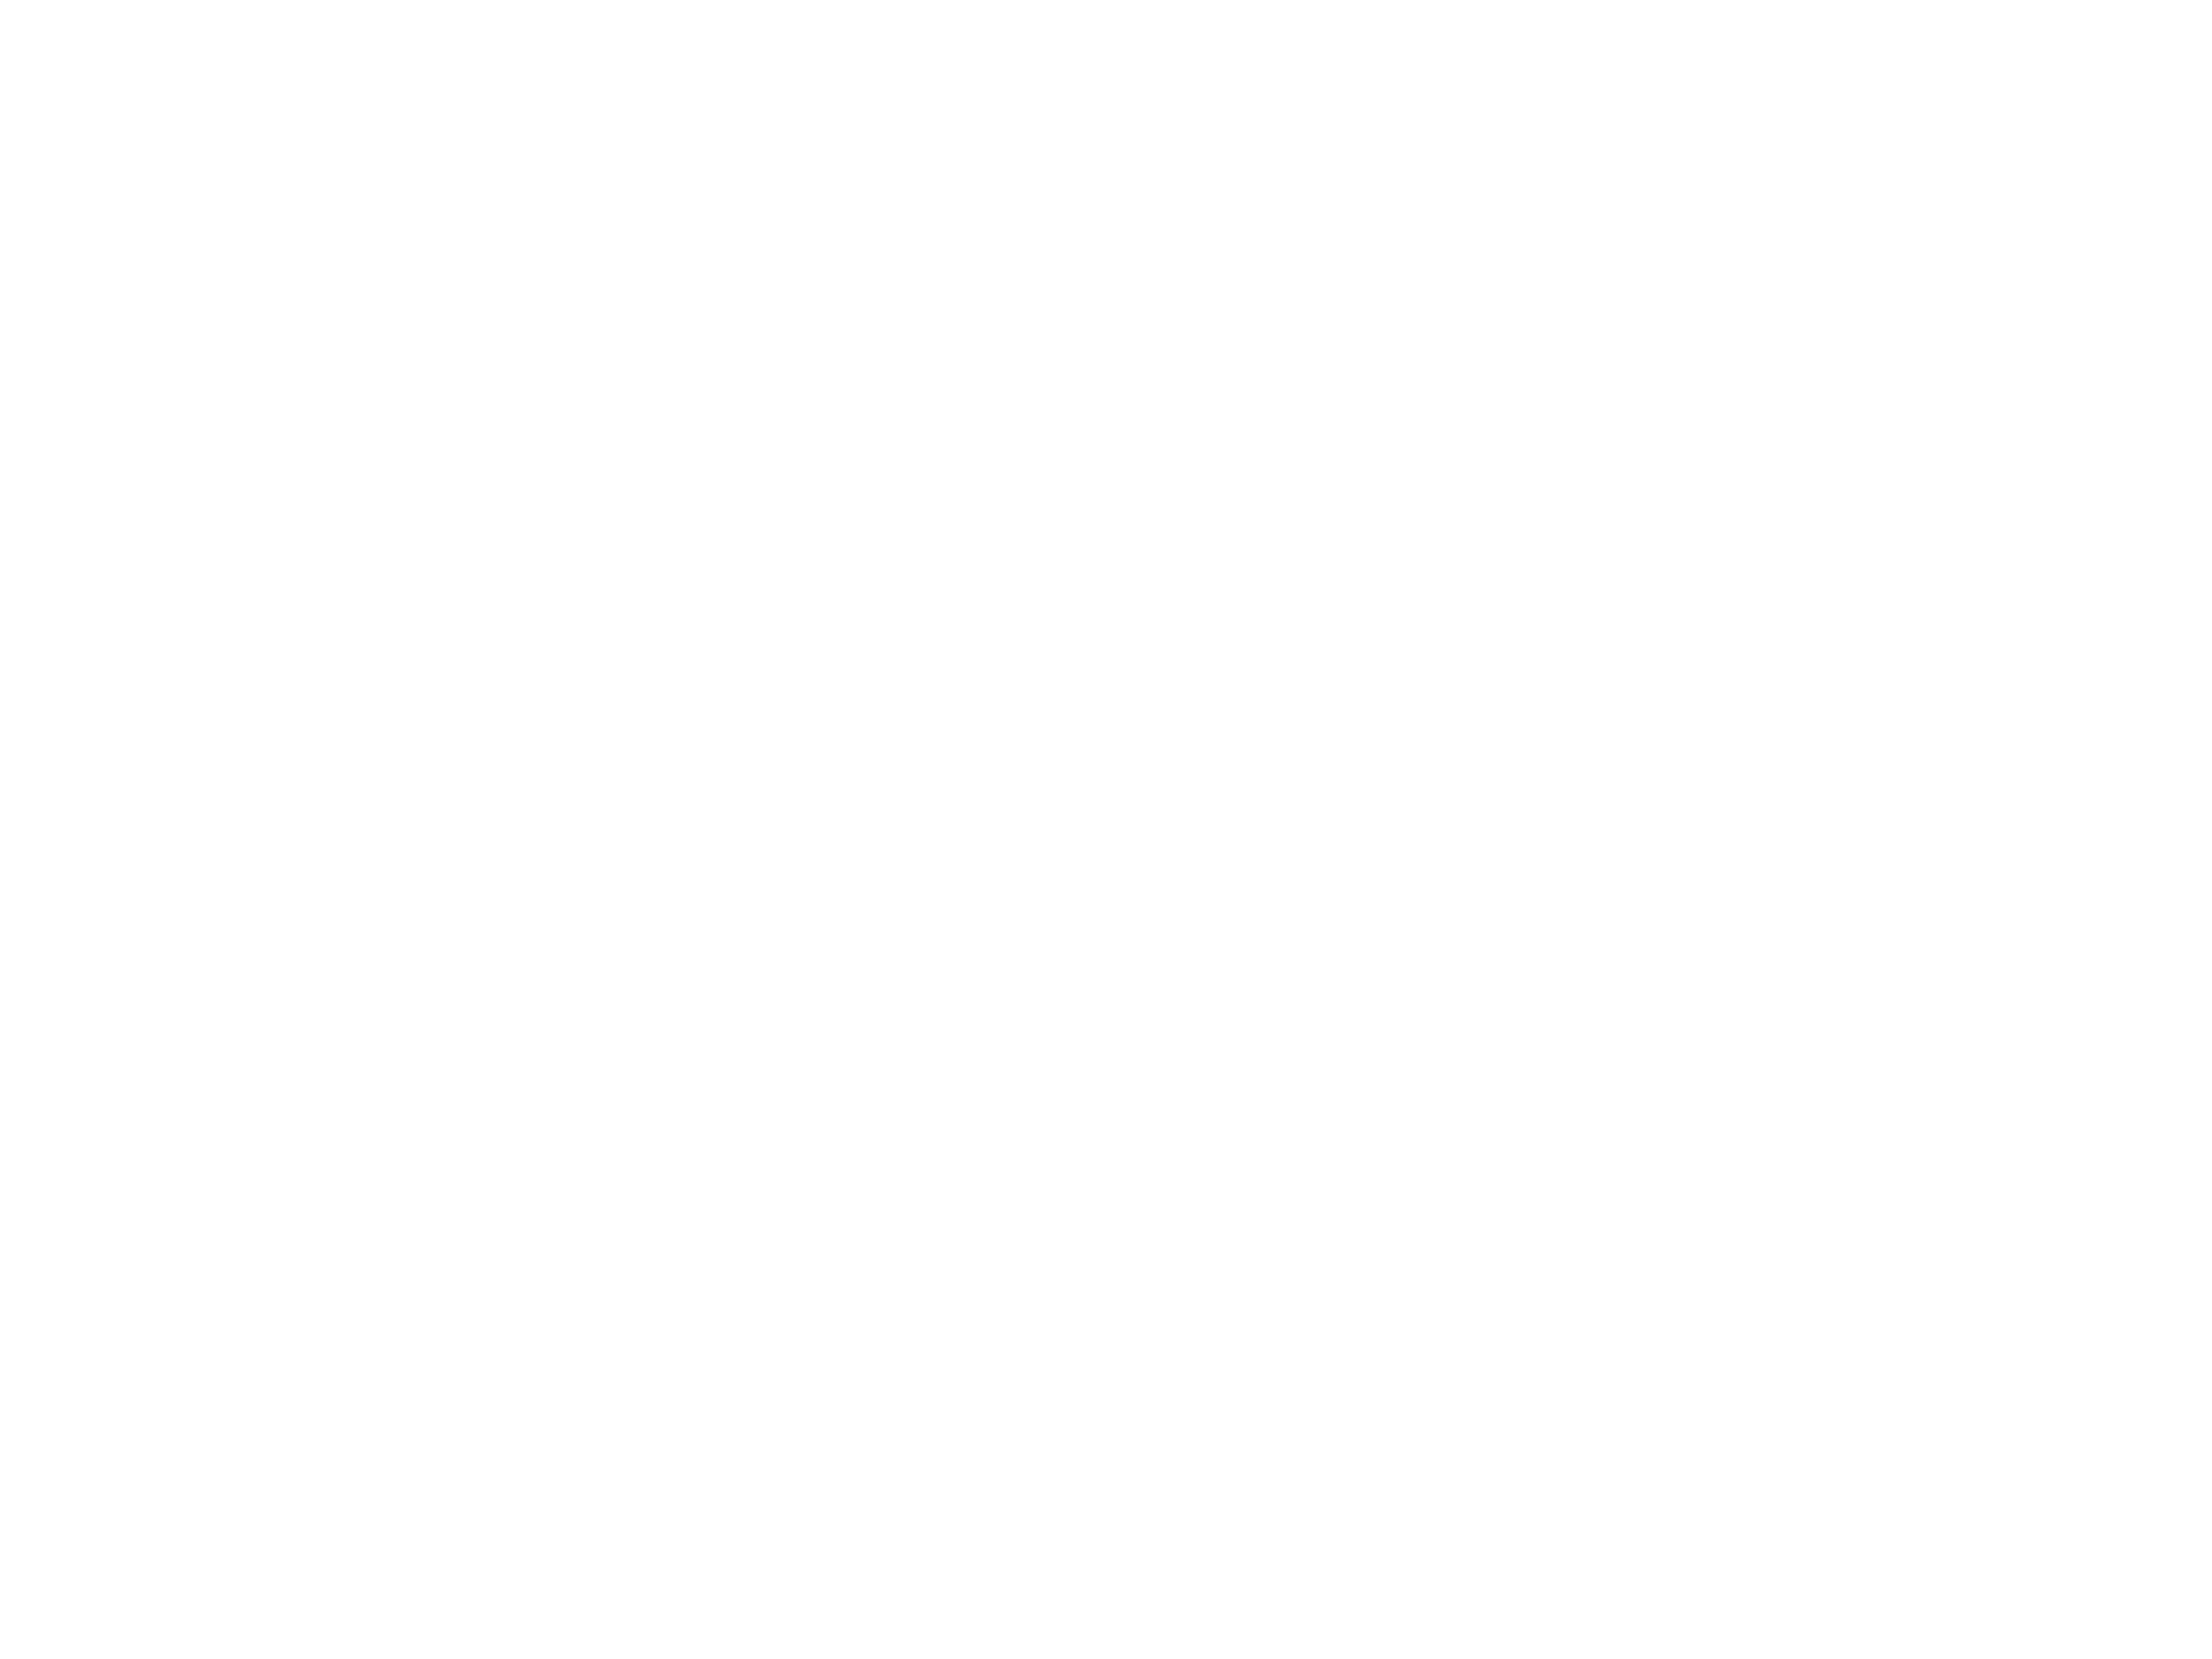 Ed-Fi Alliance logo